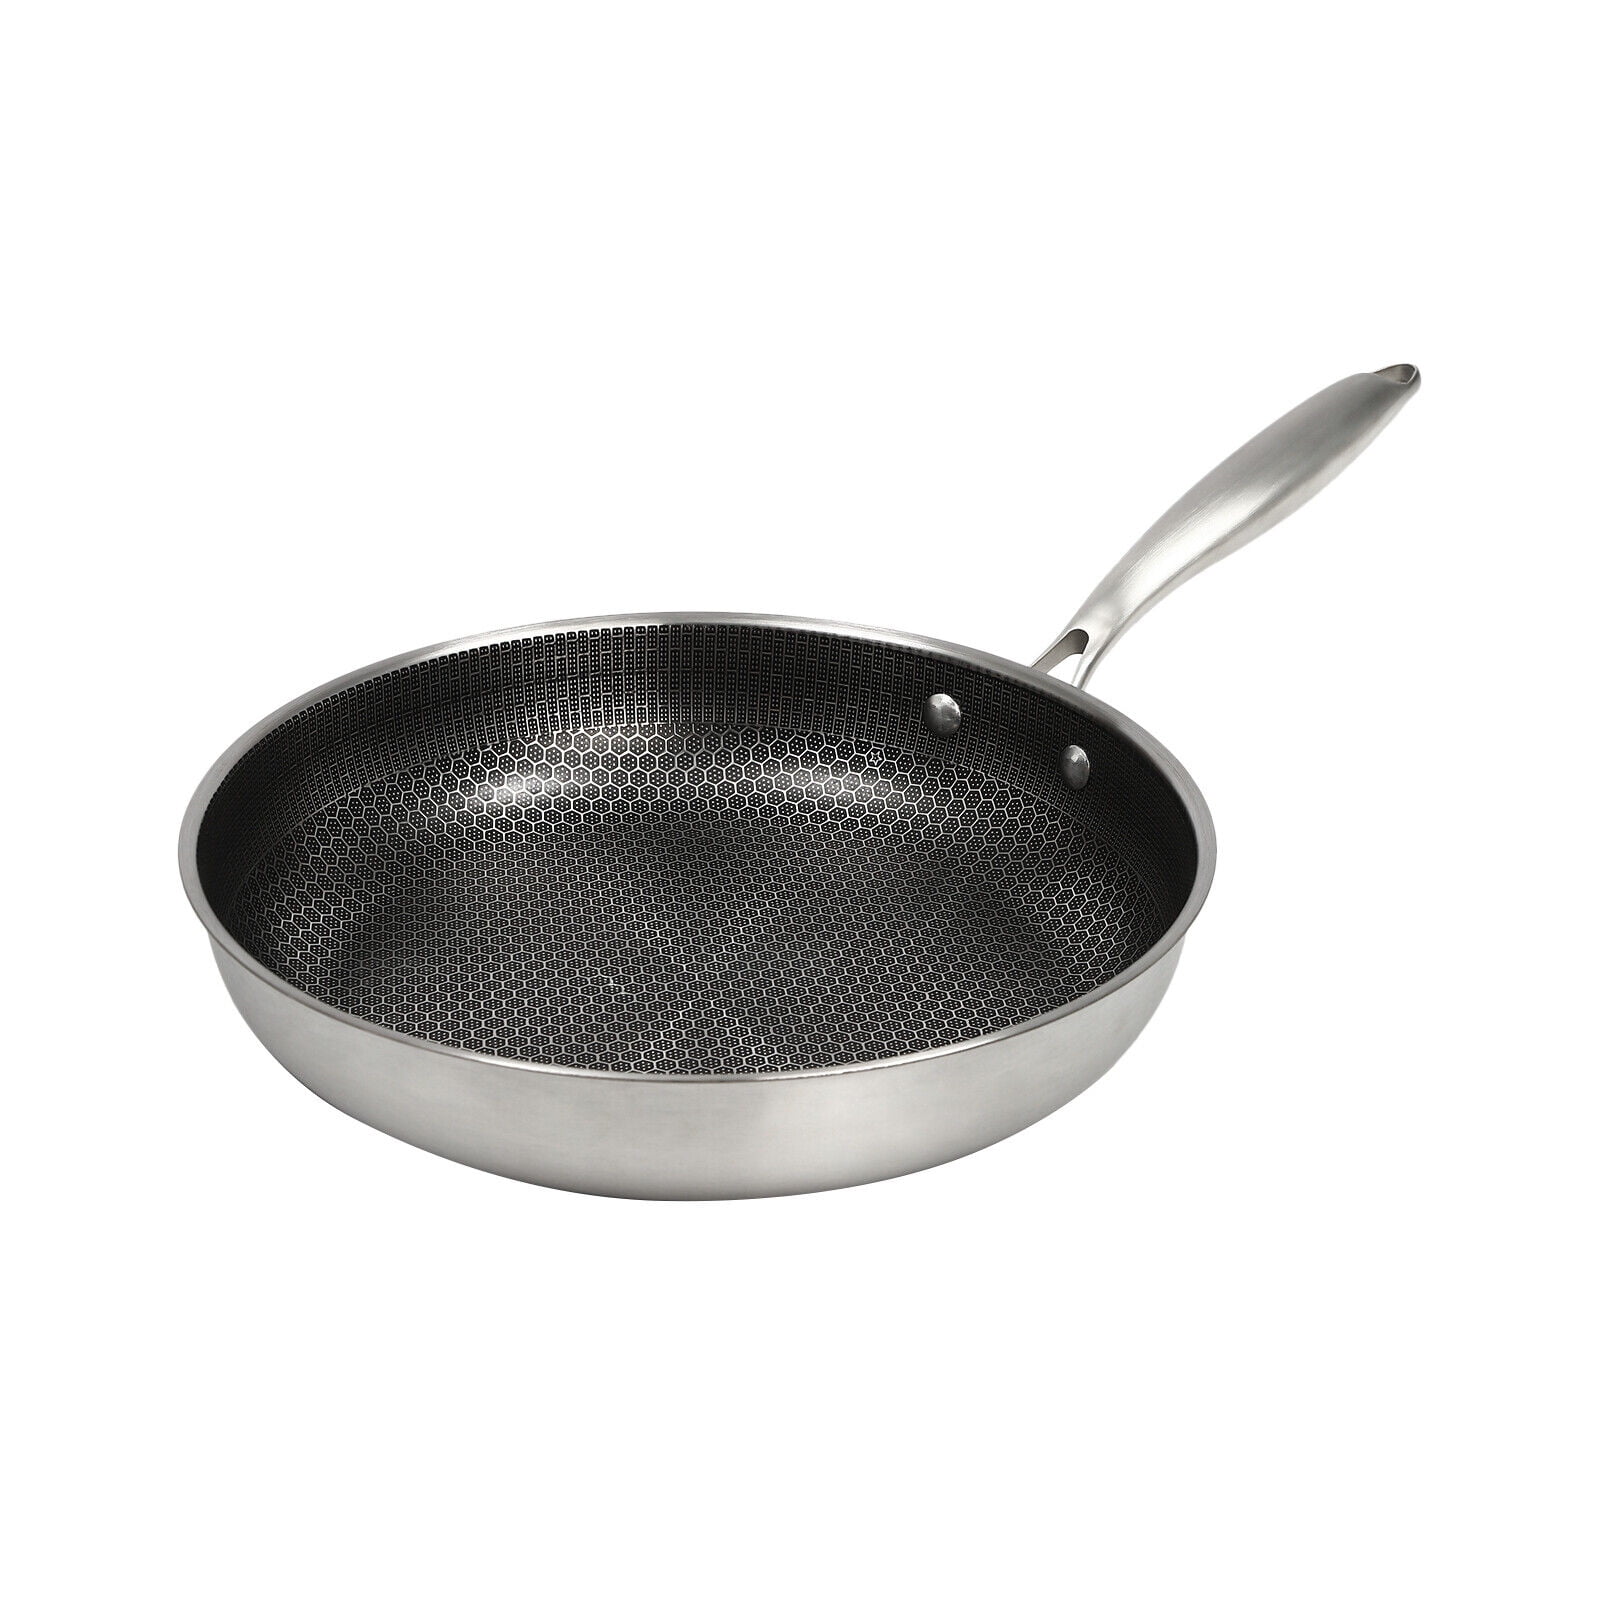 Frying Pan 12-inch Nonstick Skillet Fry Pan Stainless Steel Egg Pan ...